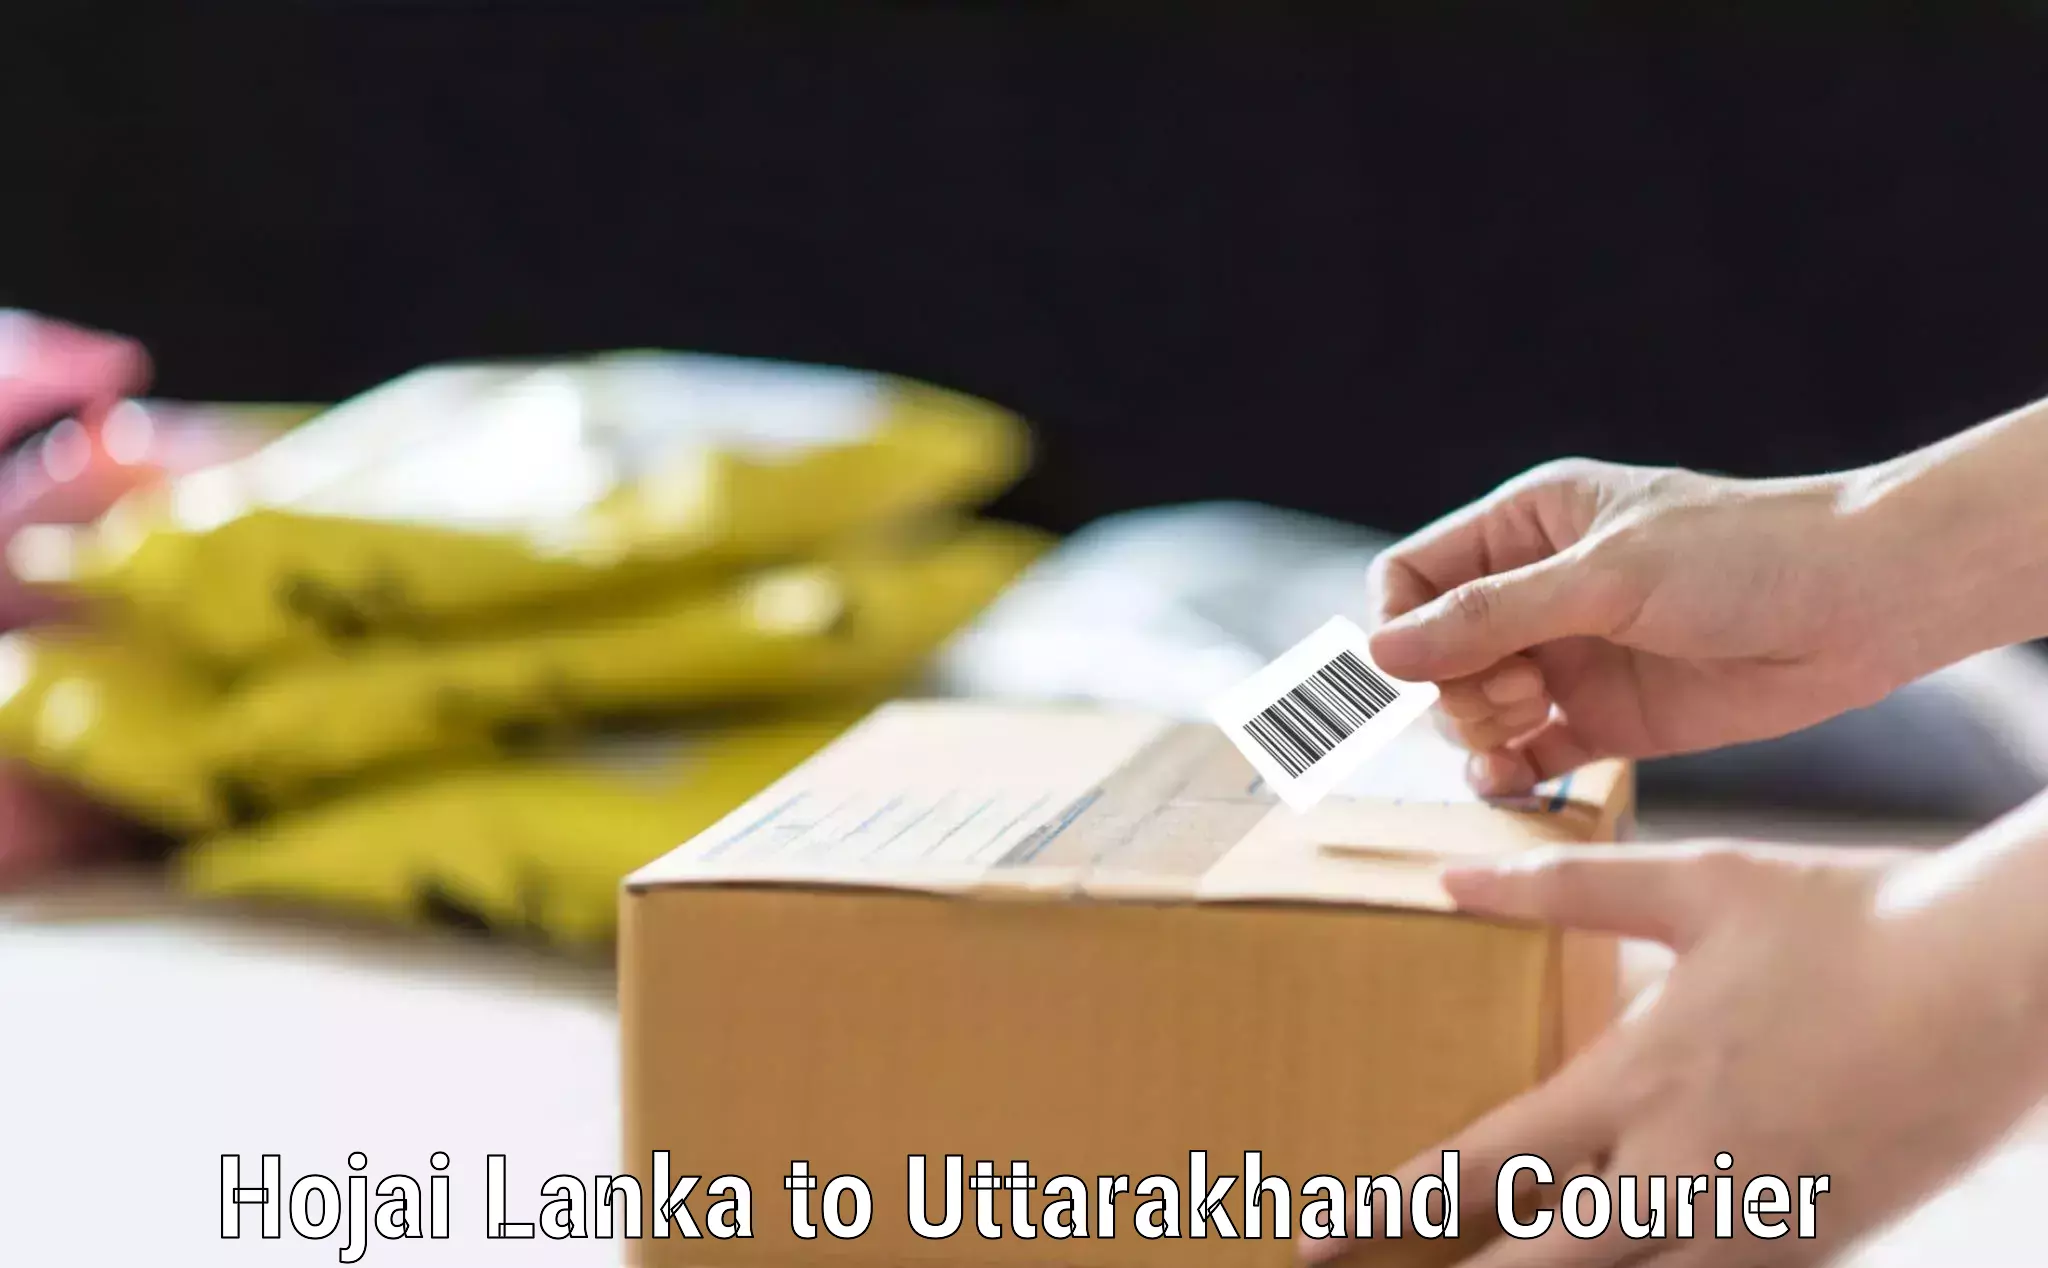 Baggage relocation service Hojai Lanka to IIT Roorkee